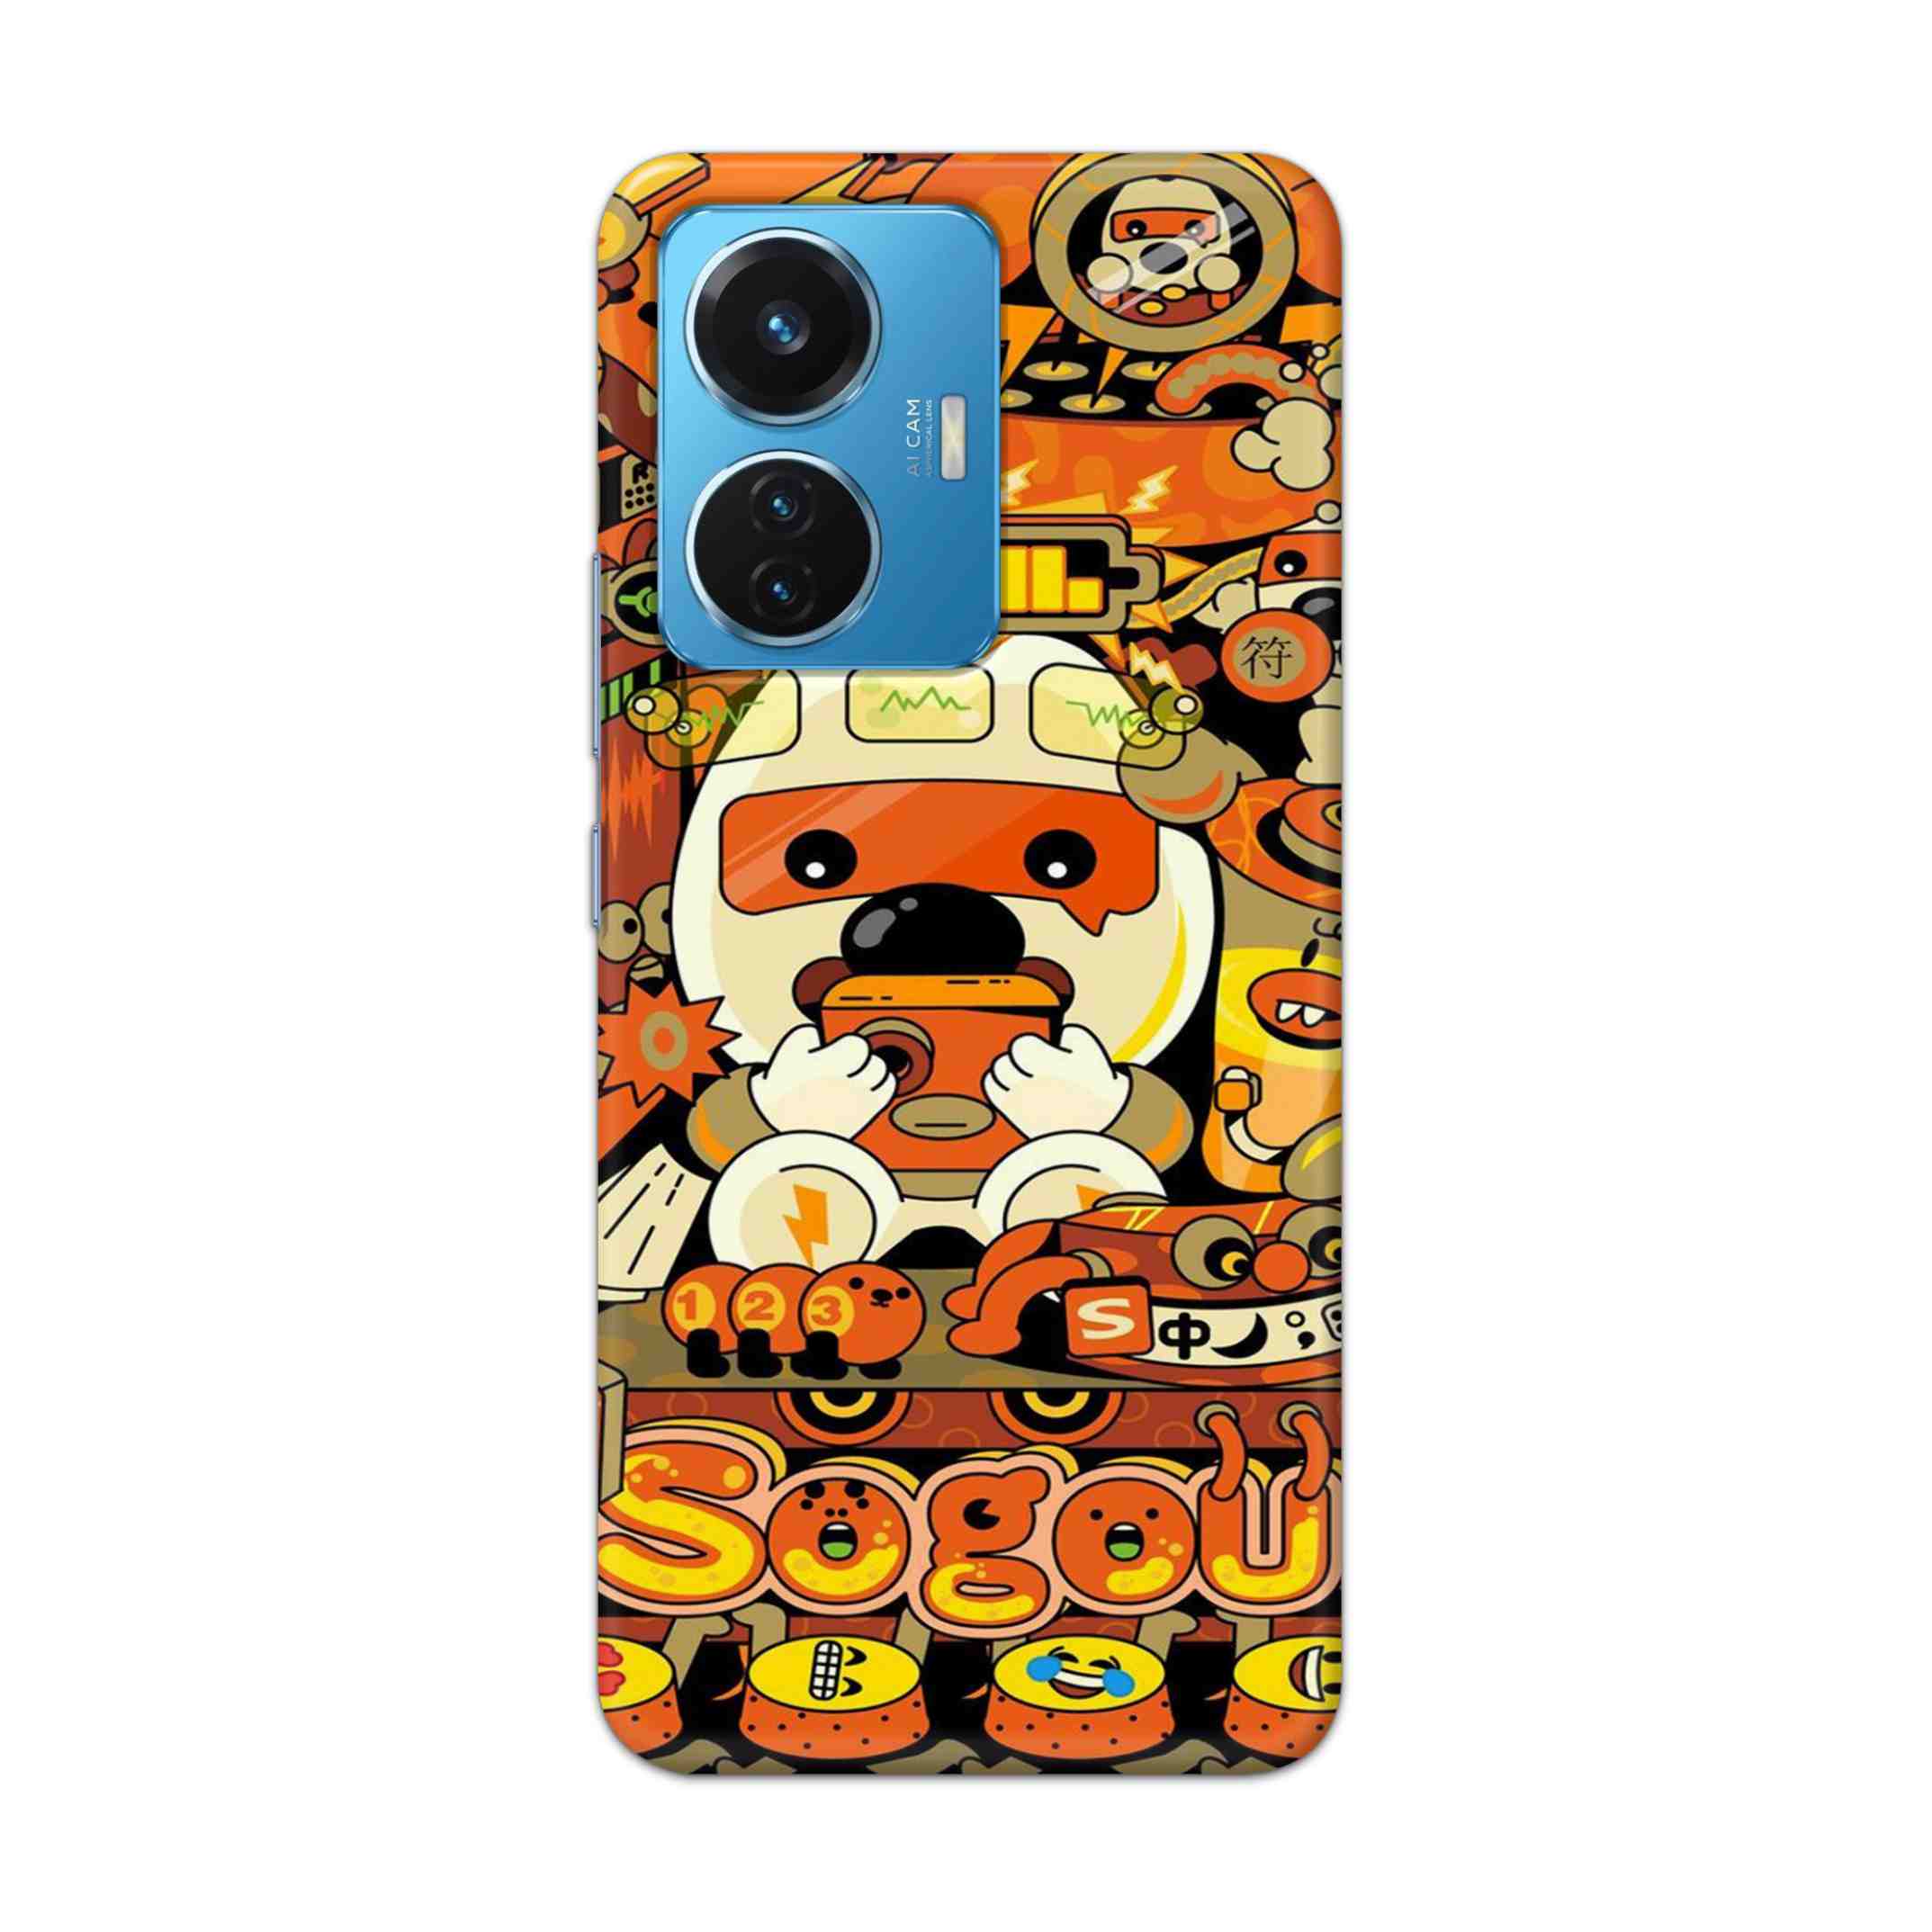 Buy Sogou Hard Back Mobile Phone Case Cover For Vivo T1 44W Online